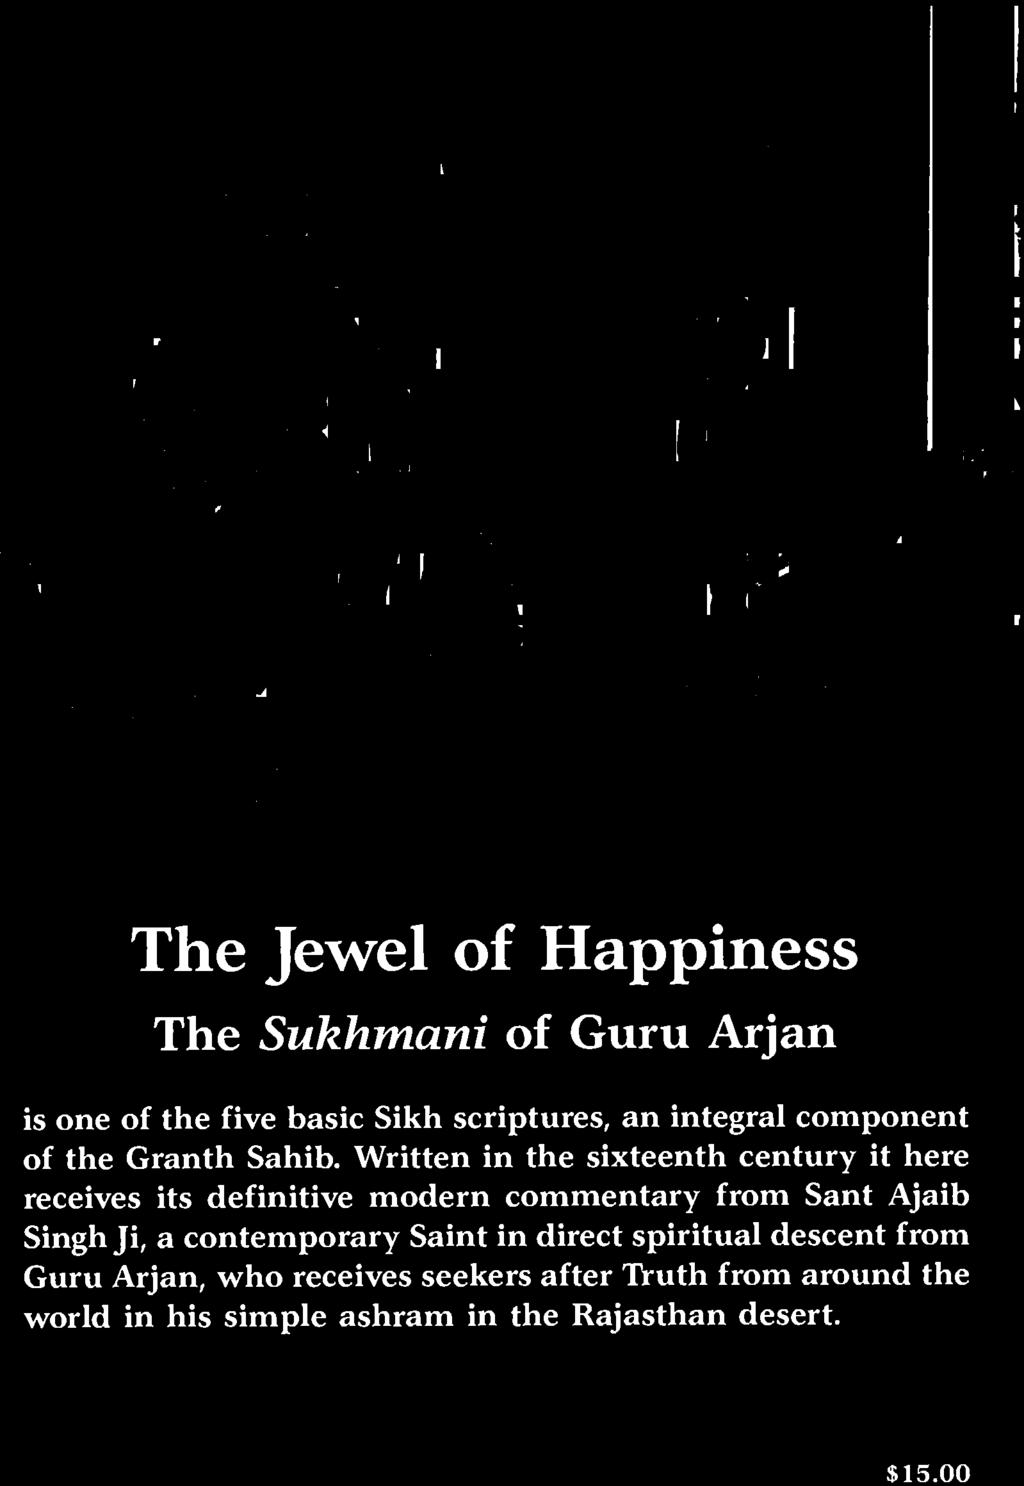 spiritual descent from Guru Arjan, who receives